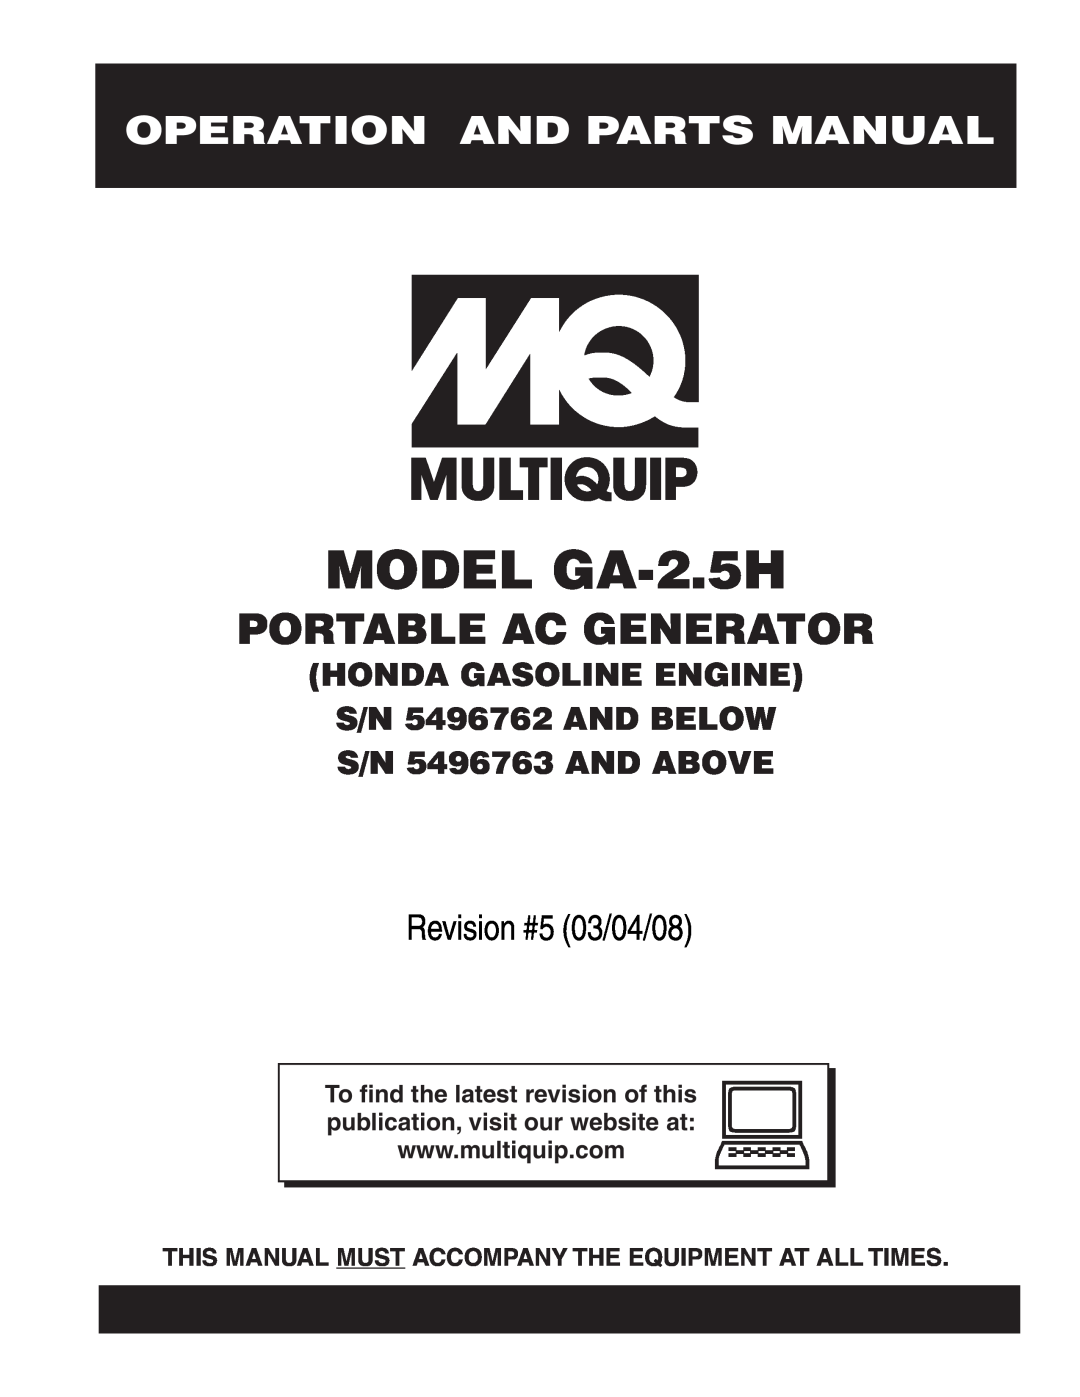 Multiquip manual Operation And Parts Manual, MODEL GA-2.5H, Portable Ac Generator, Revision #5 03/04/08 